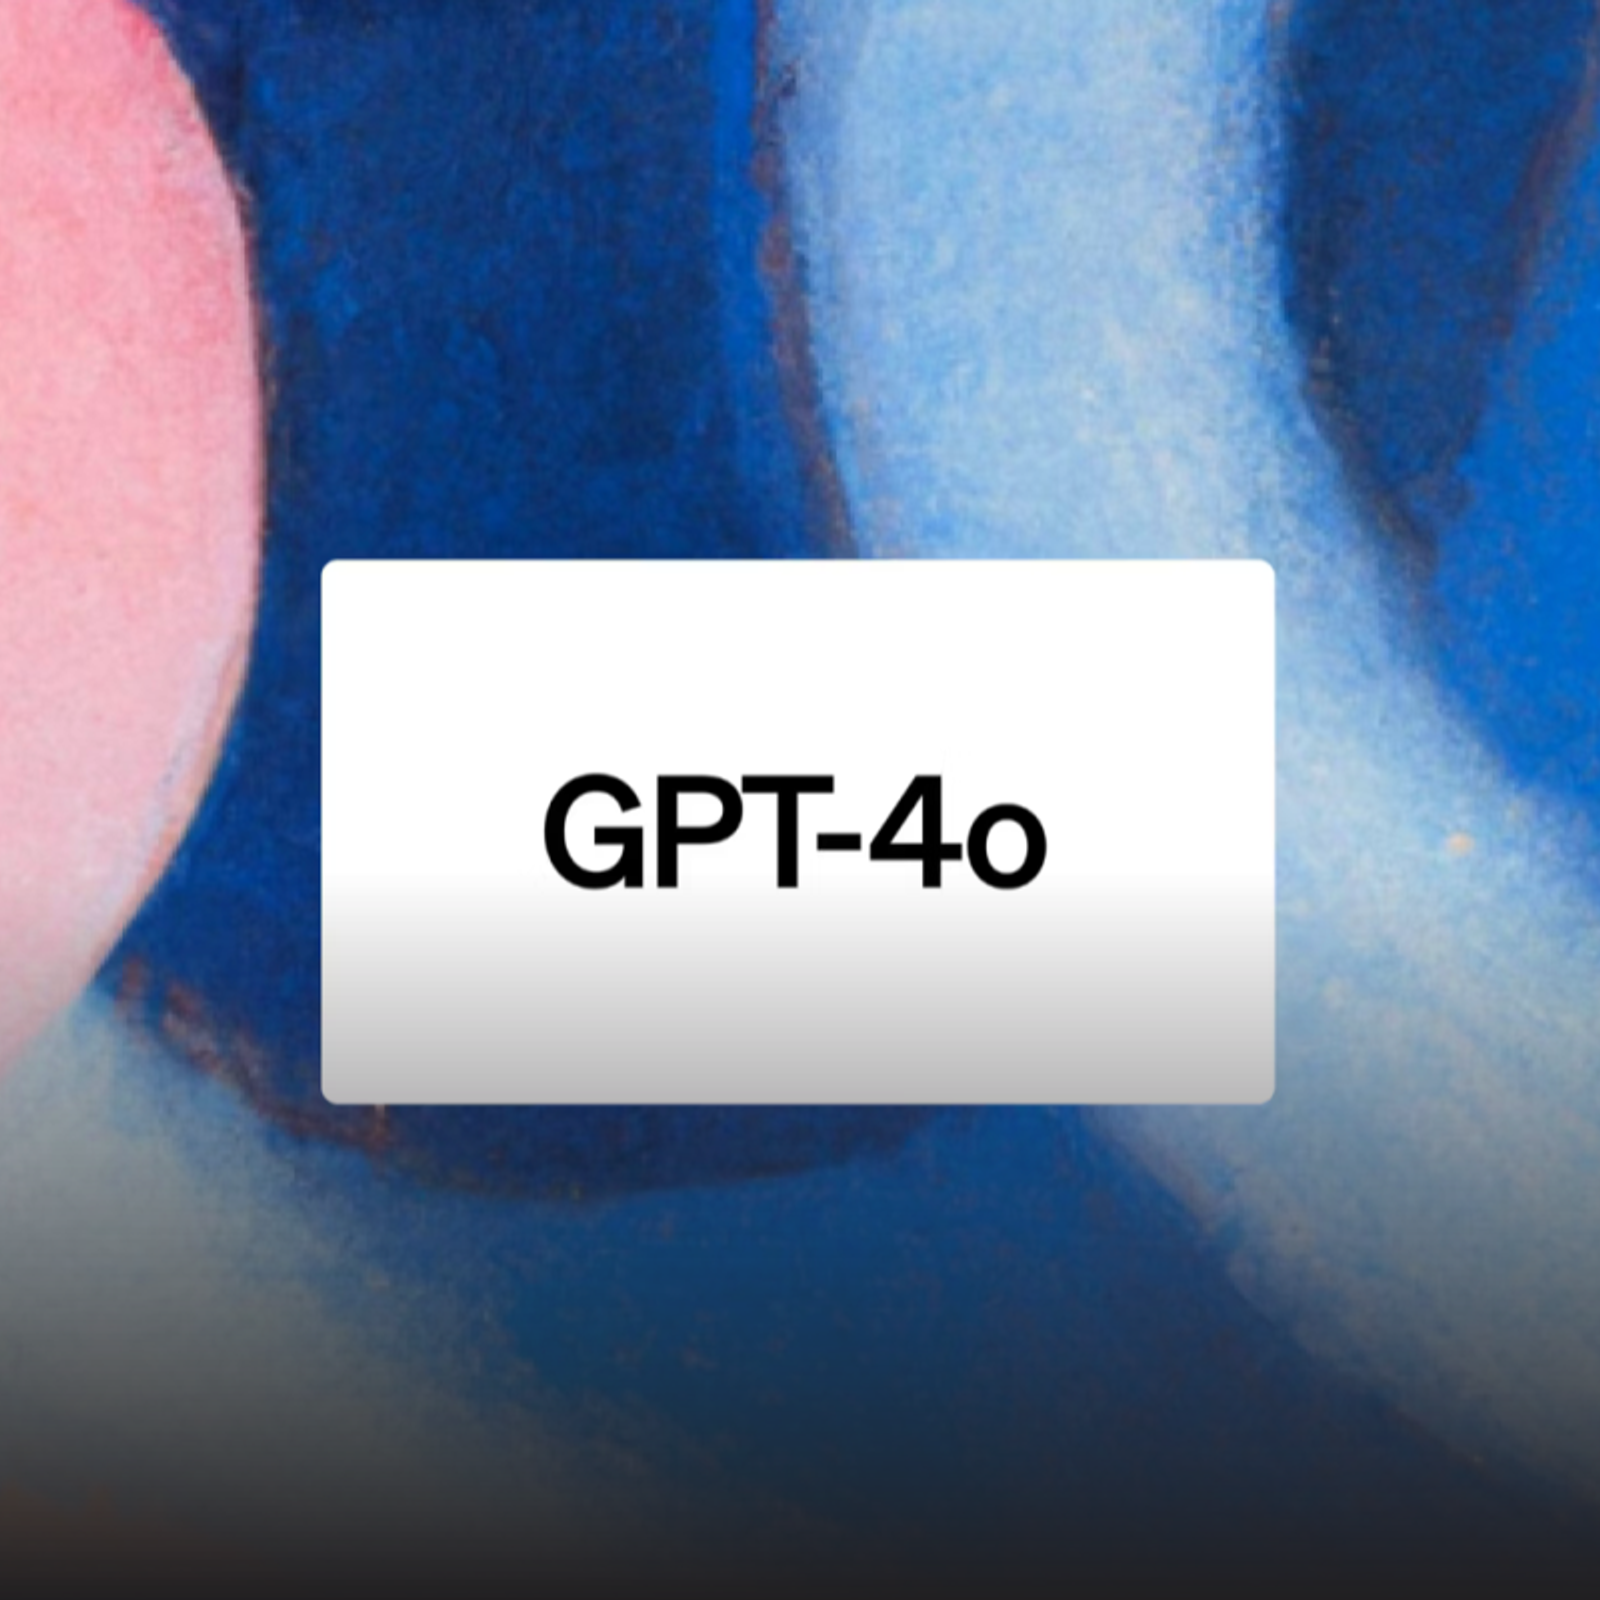 OpenAI unveils new flagship AI model GPT-4o